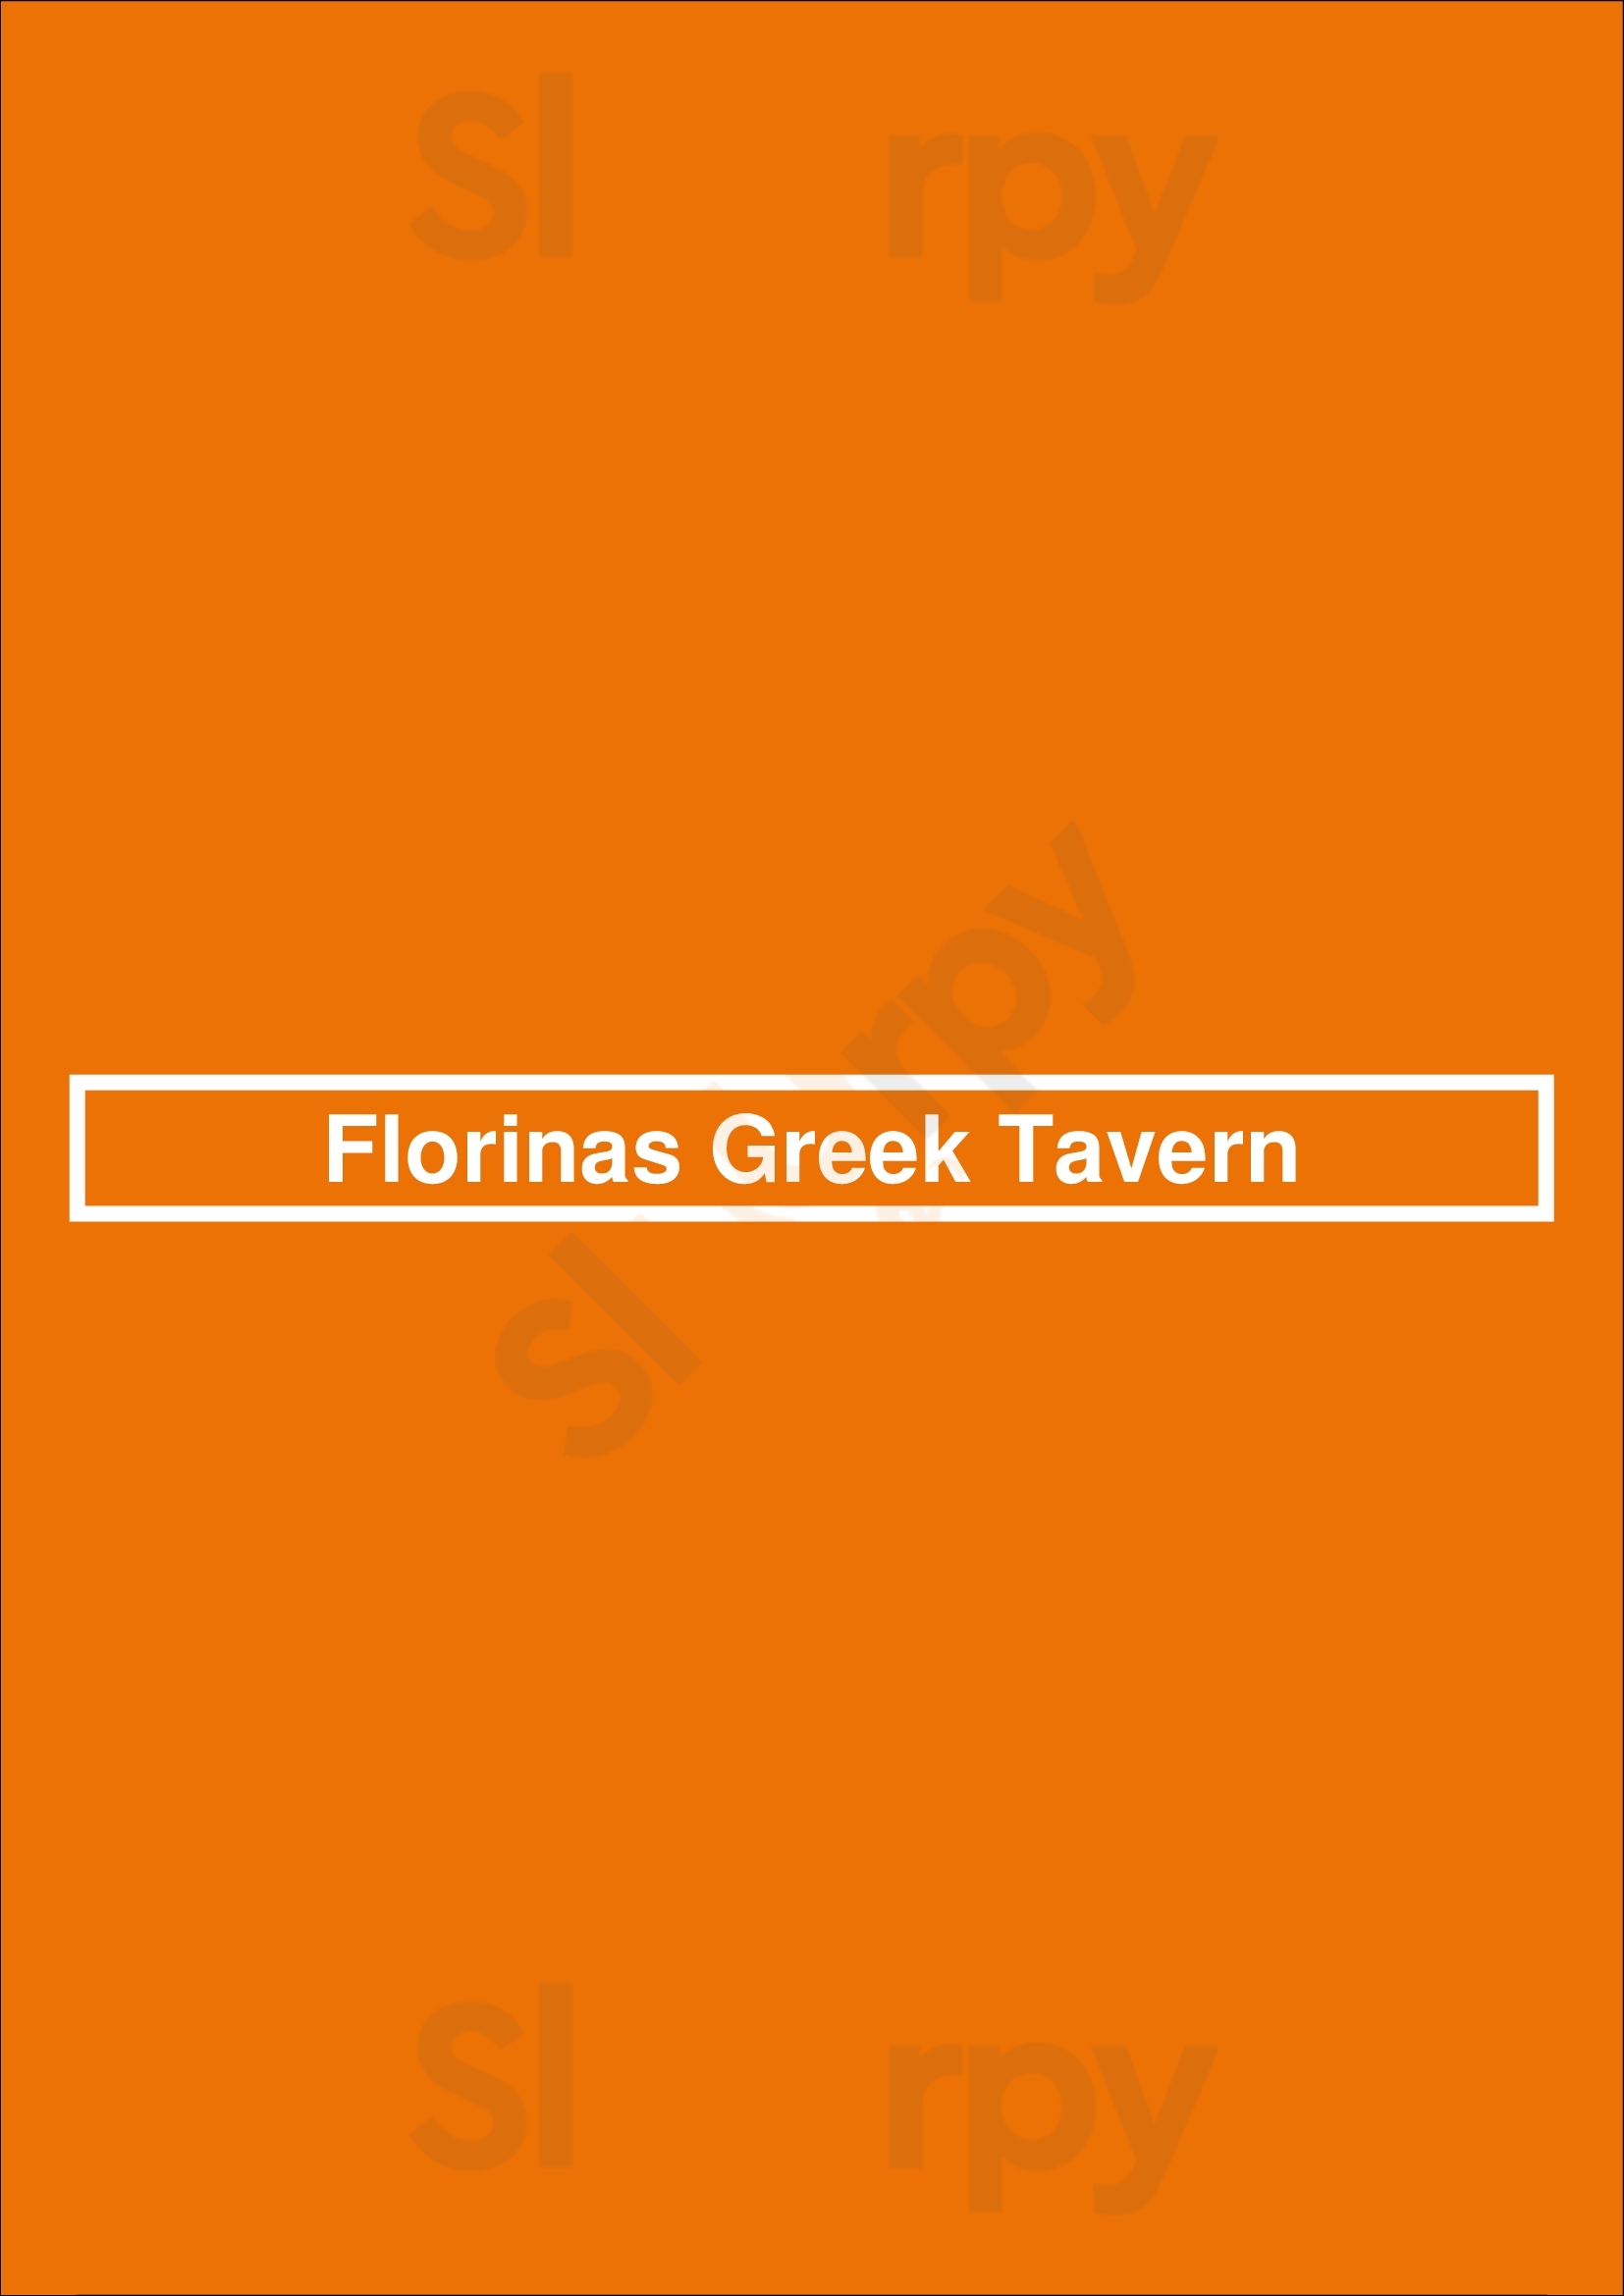 Florinas Greek Tavern Malvern Menu - 1